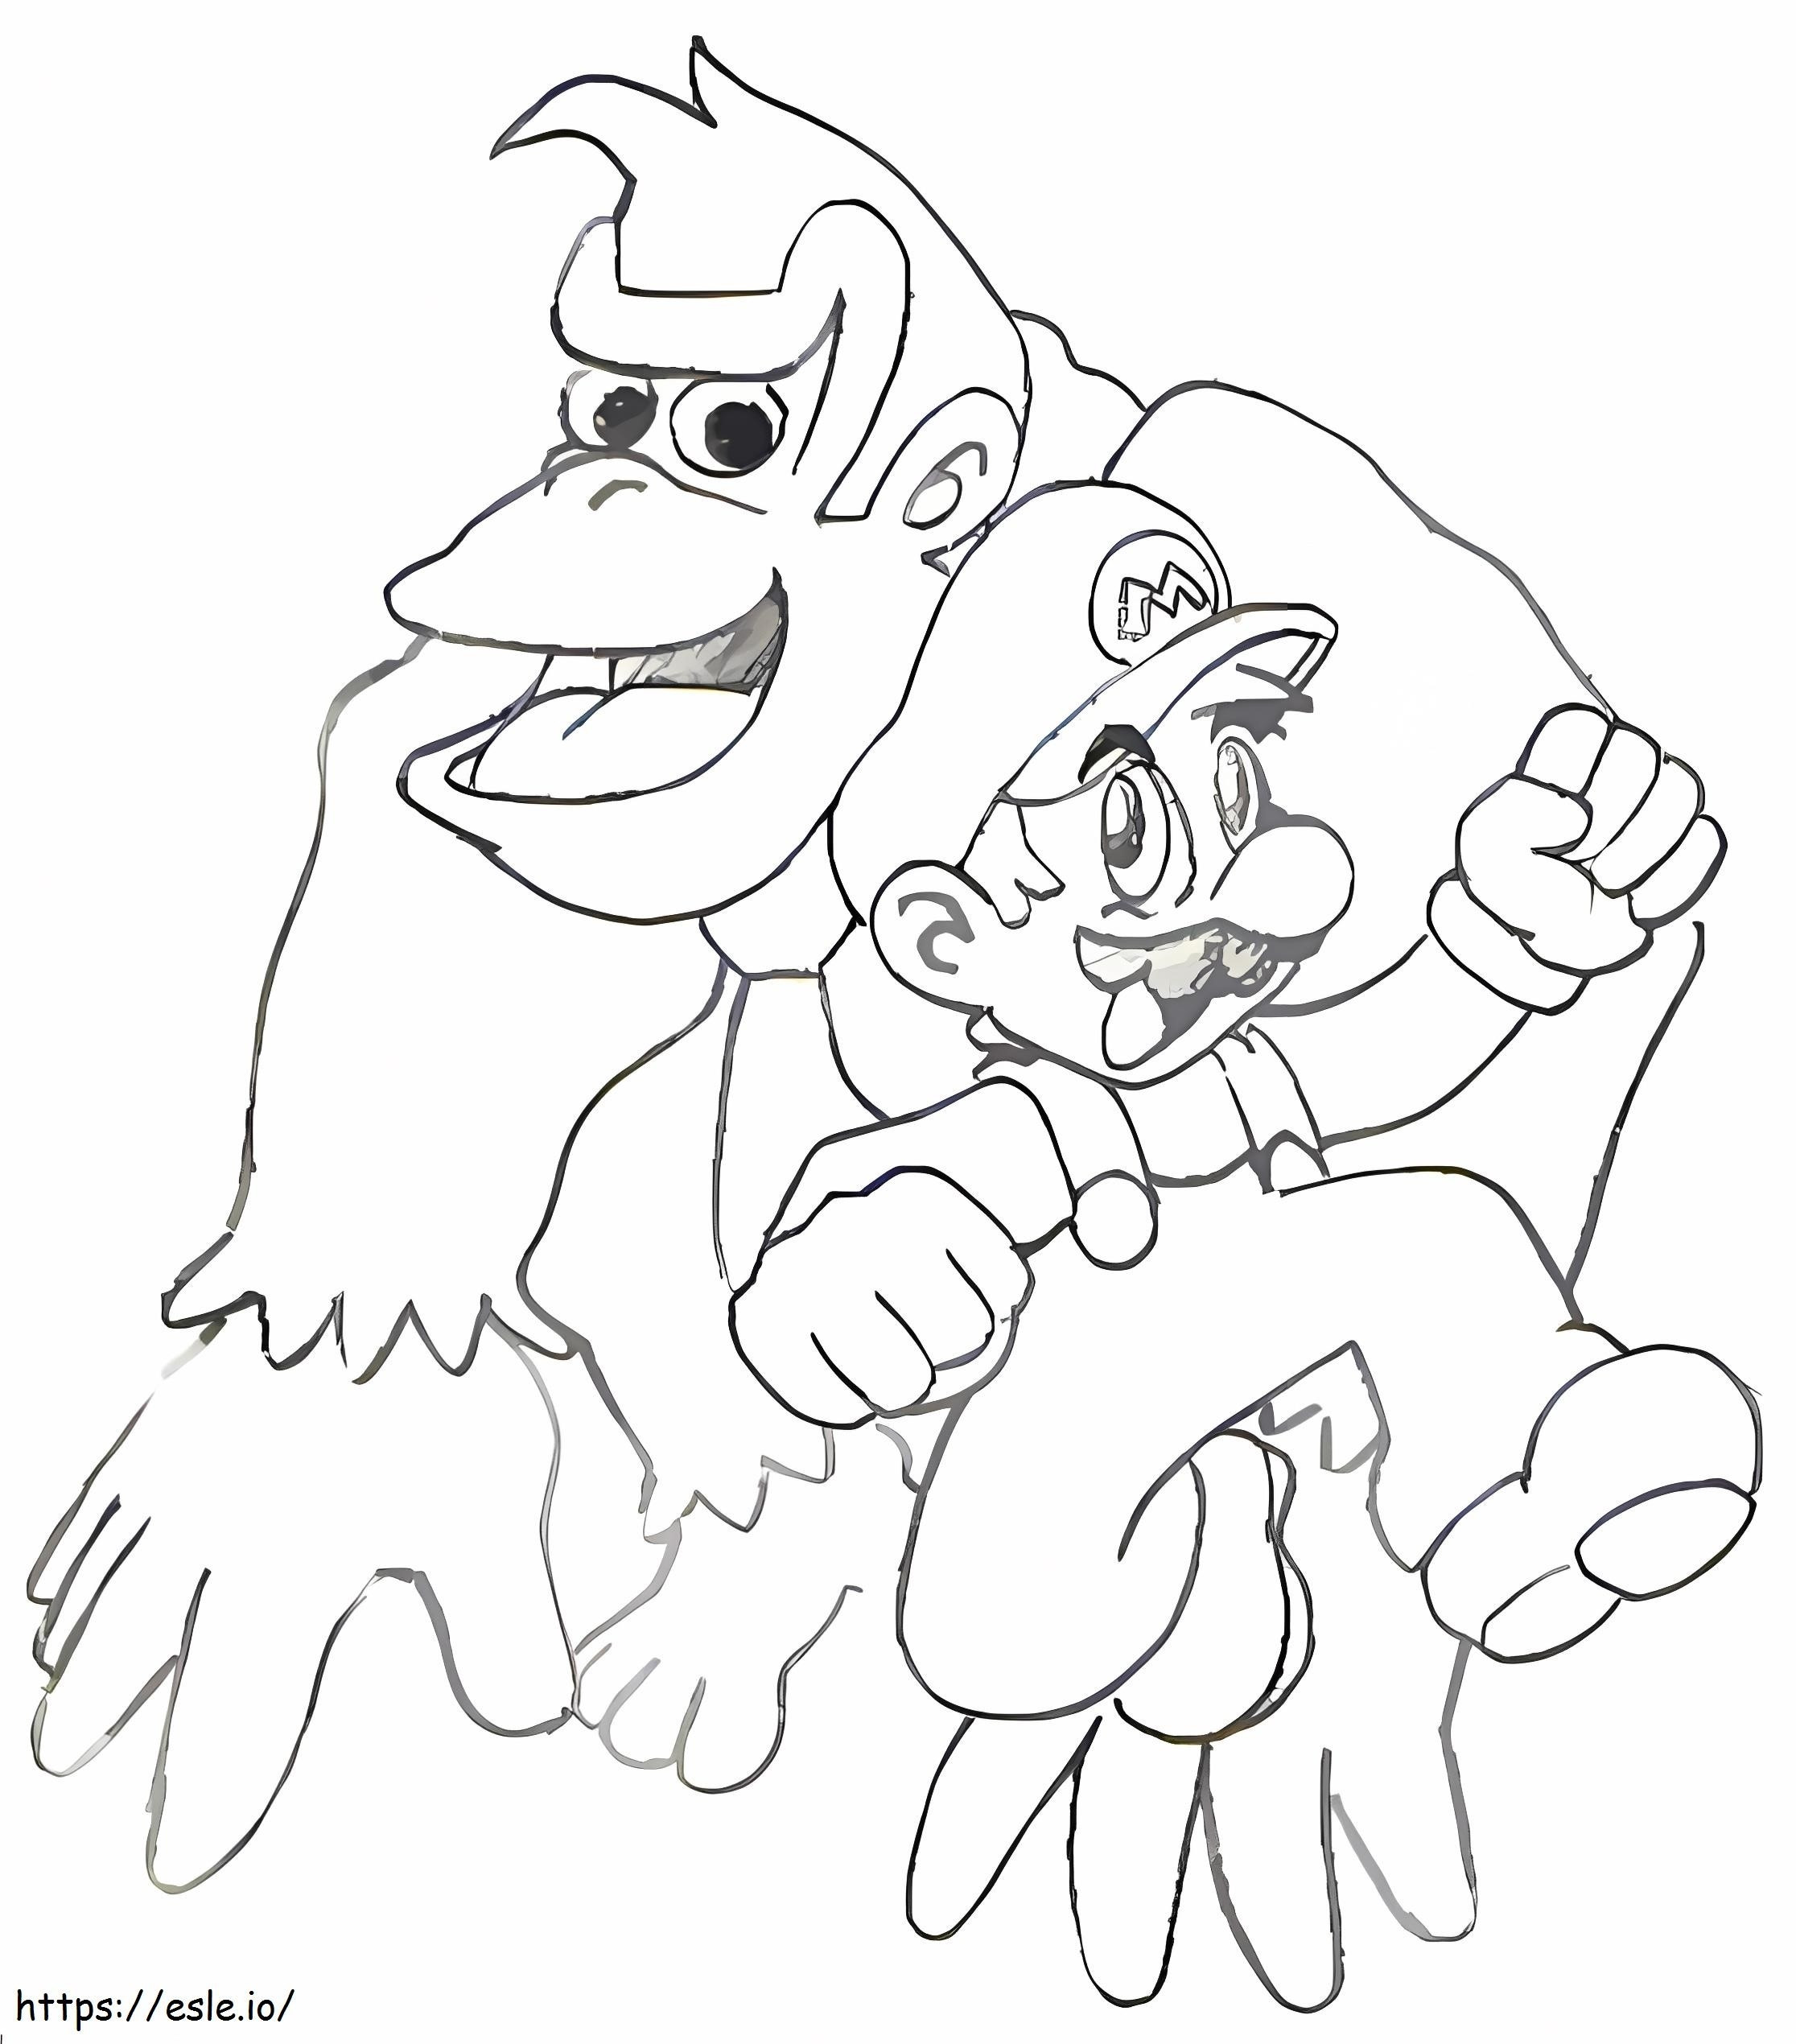 Mario Y Donkey Kong boyama